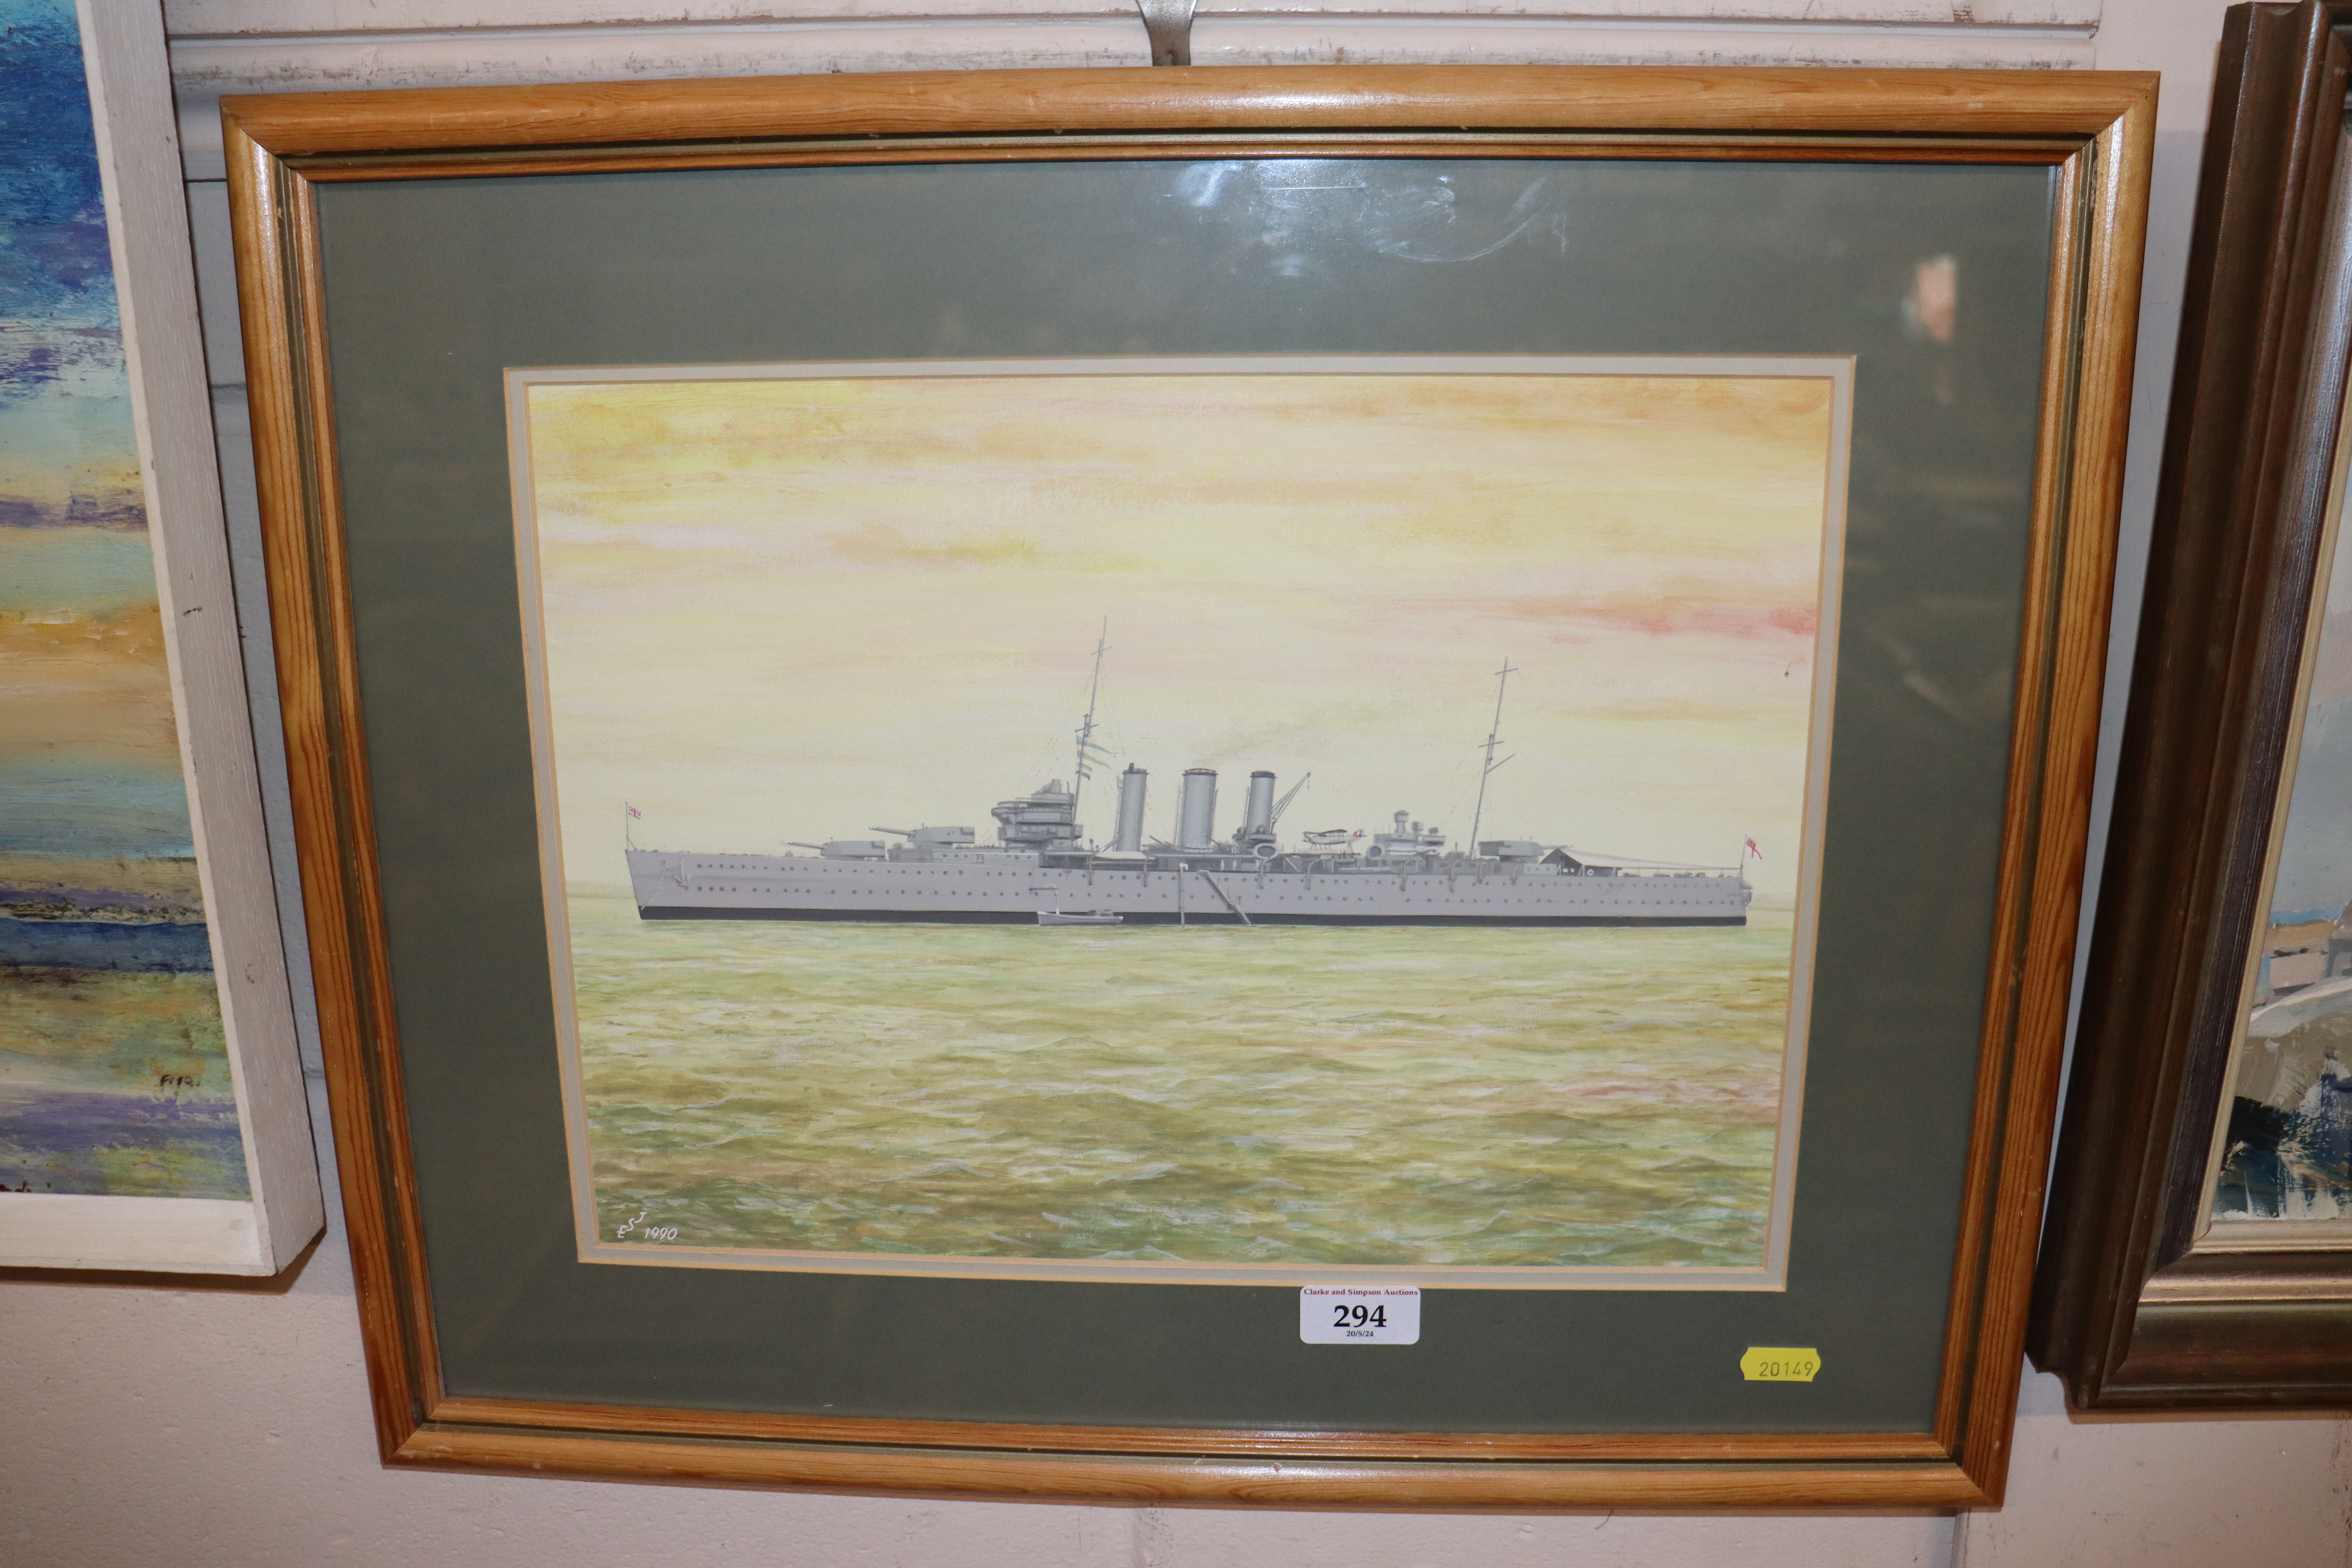 A framed and glazed acrylic depicting a battle shi